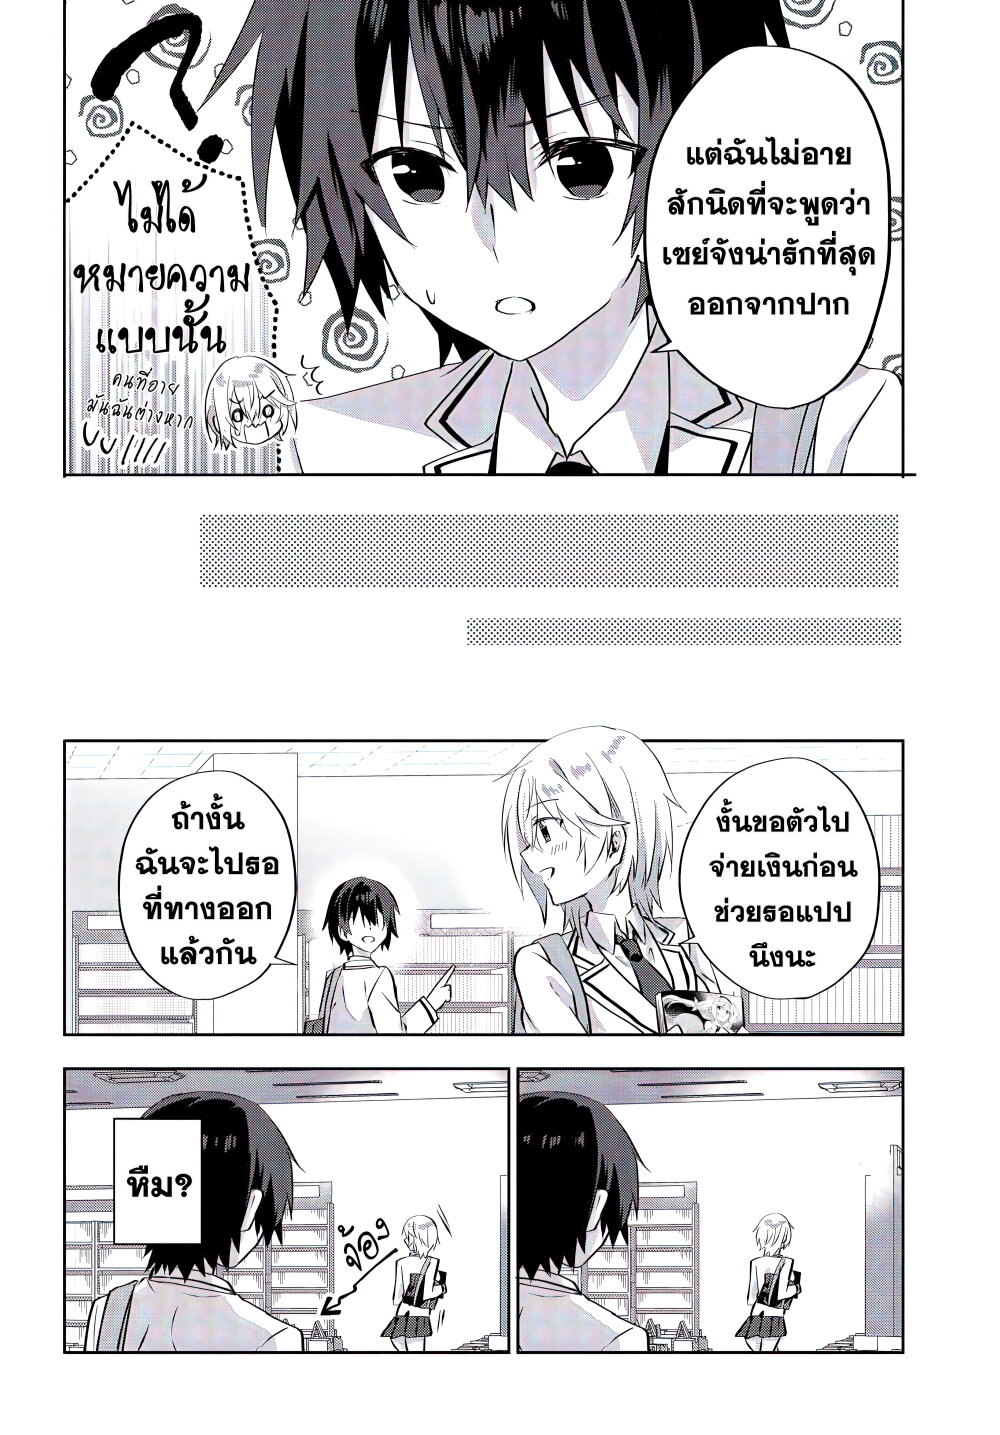 Romcom Manga ni Haitte 5.1 08